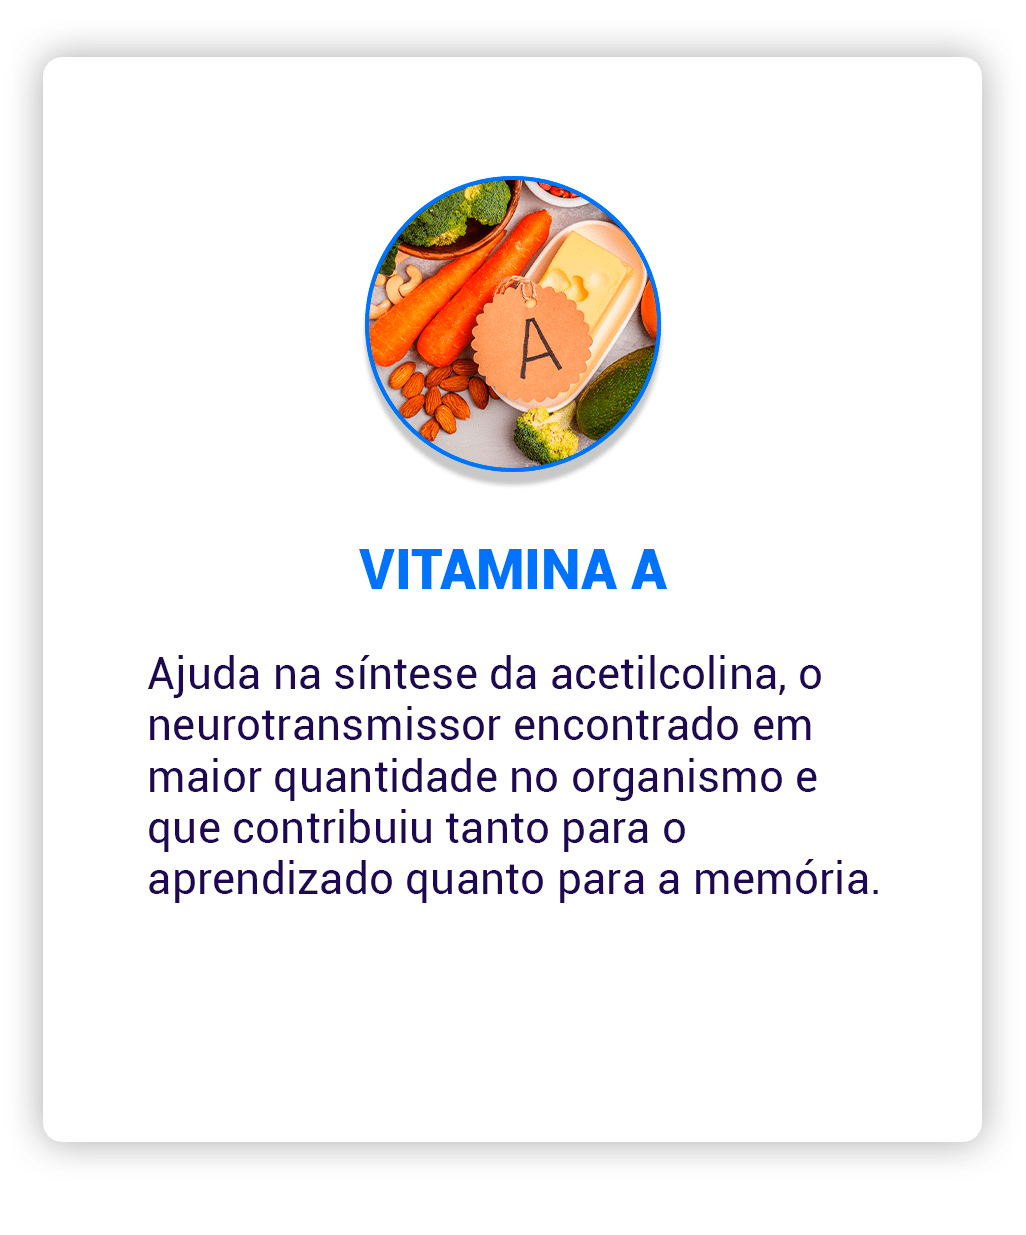 Vitamina-A-Retinol-min.png